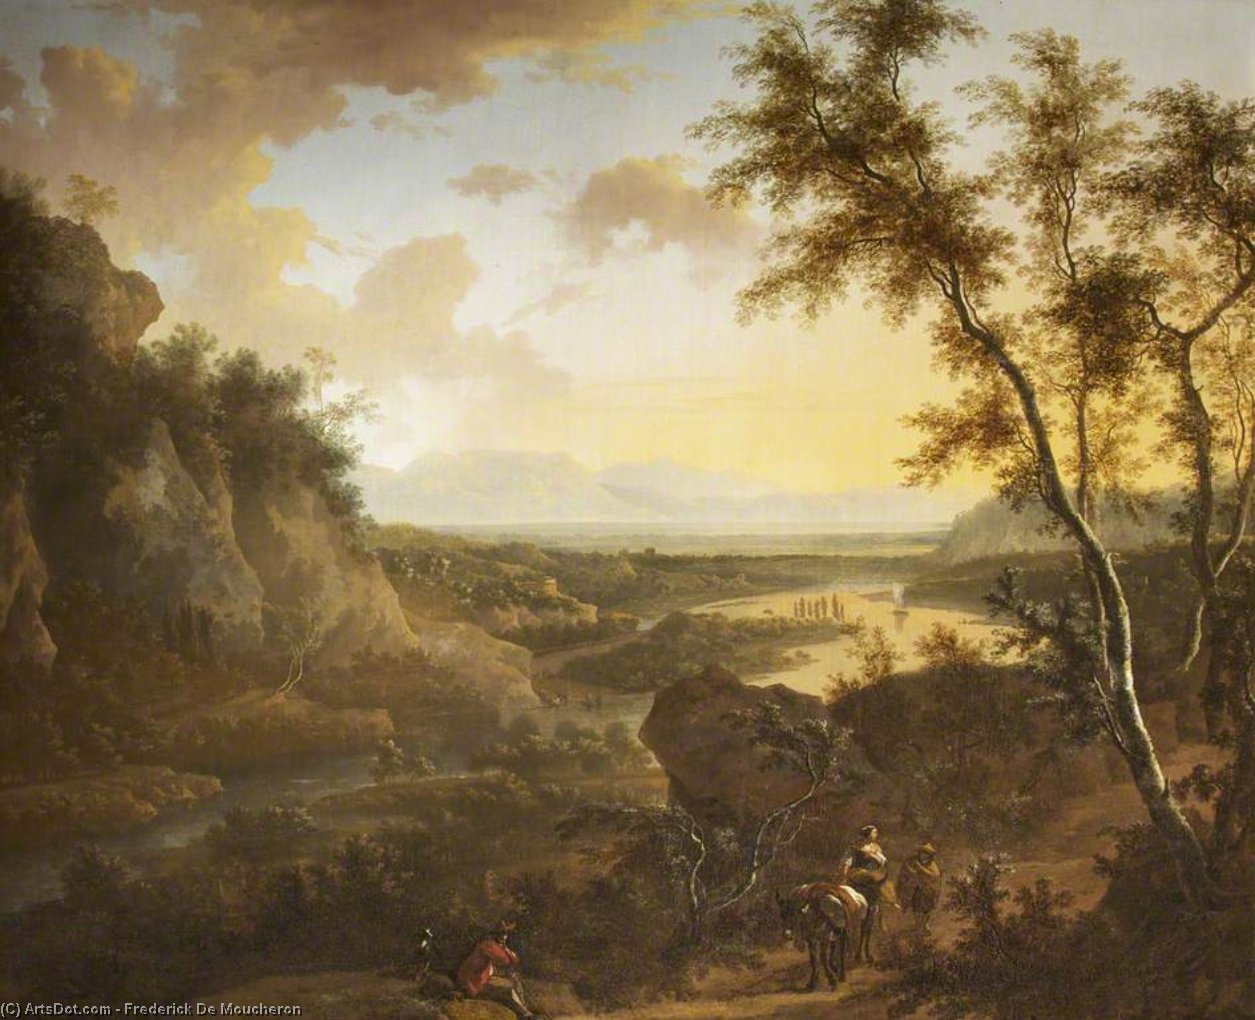 Buy Museum Art Reproductions An italianate landscape by Frederik De Moucheron | ArtsDot.com